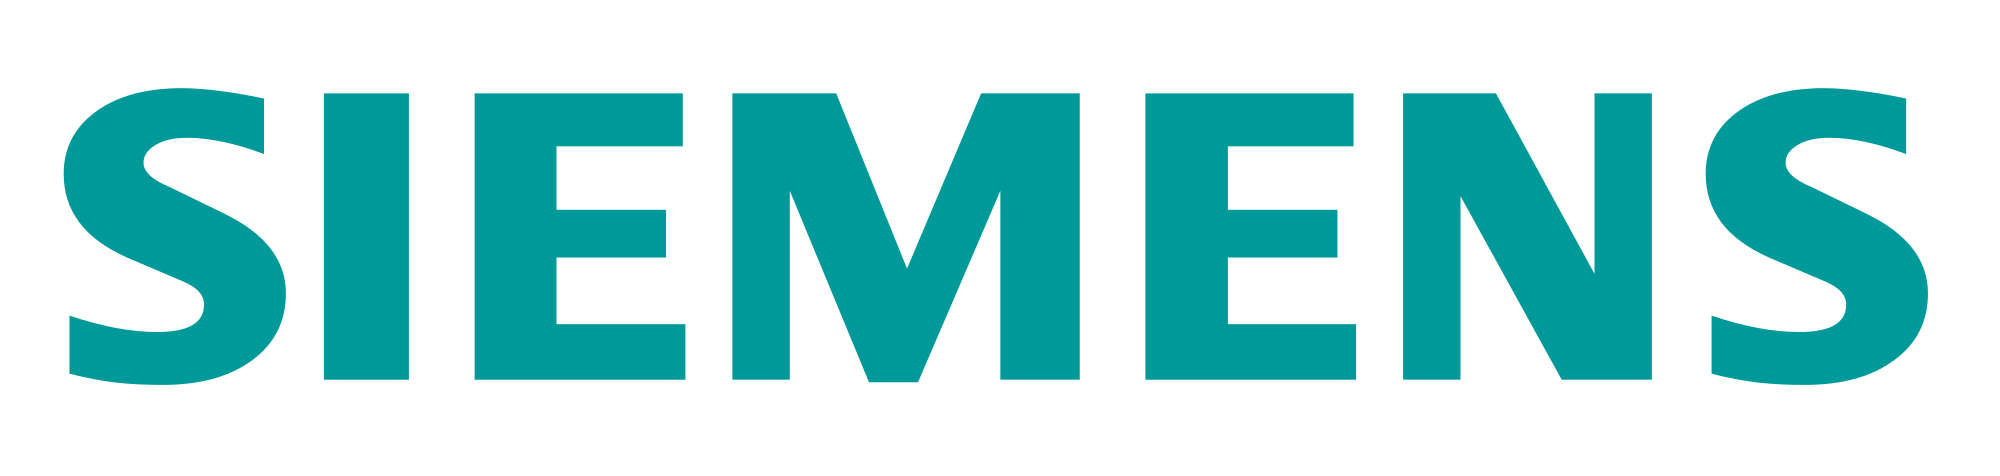 2000px-Siemens-logo.svg